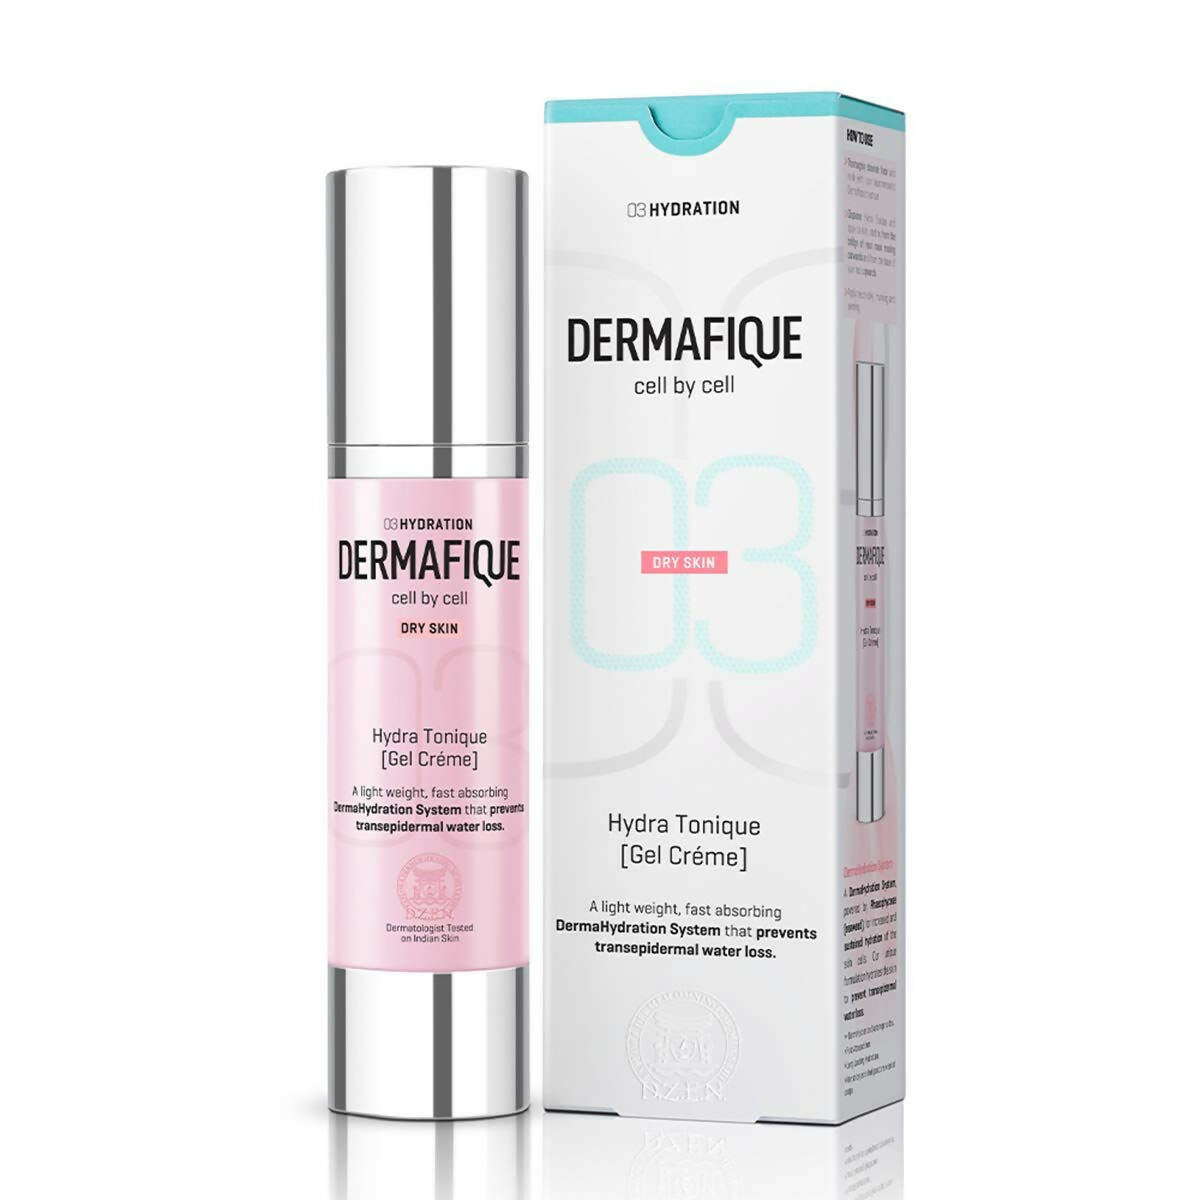 Dermafique Hydratonique Gel Creme Hydrating Moisturizer for Dry Skin - BUDNE